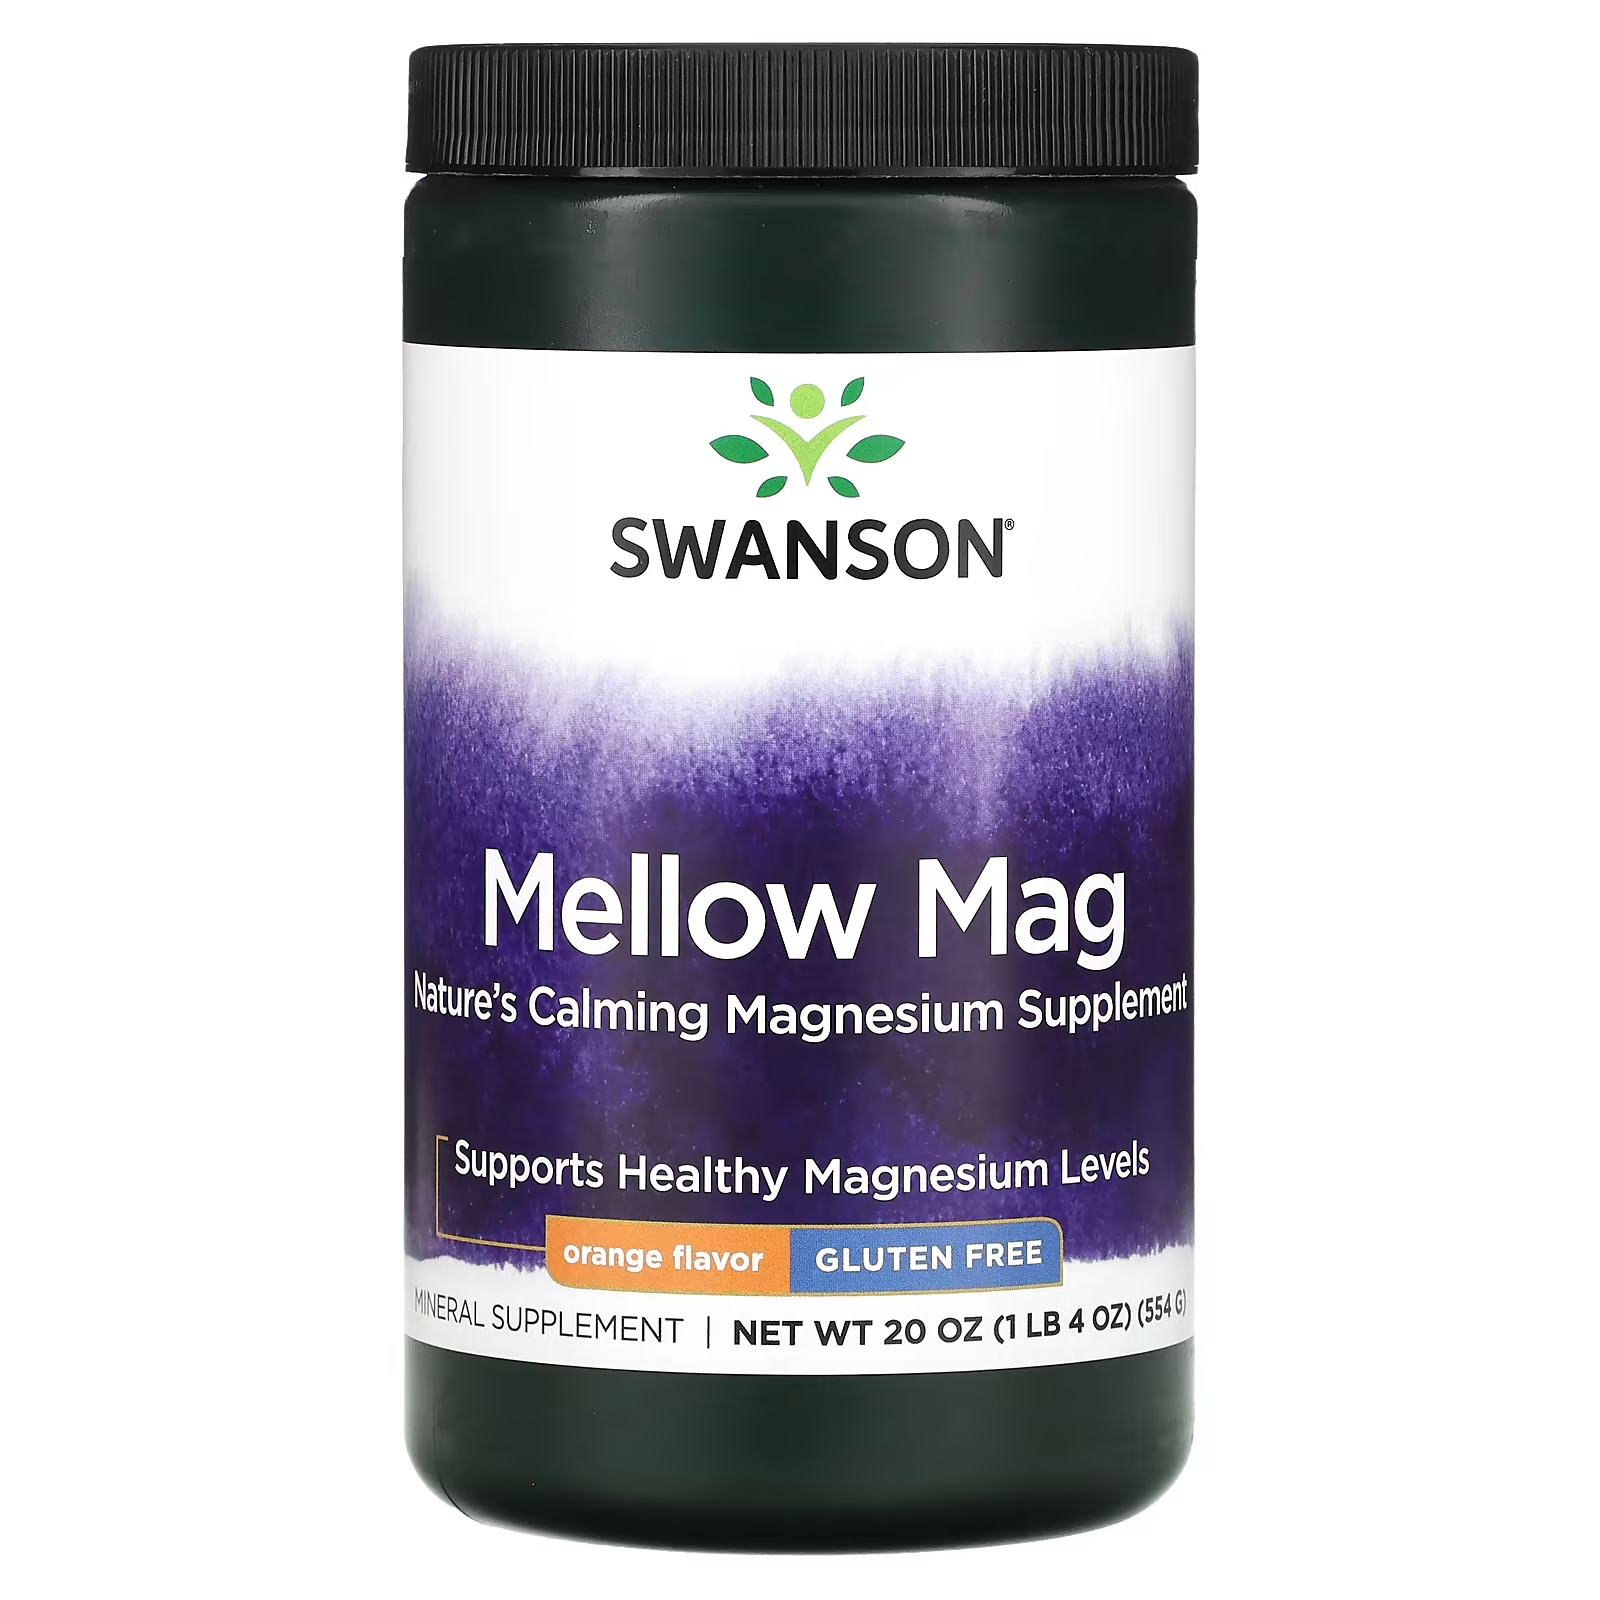 Пищевая добавка Swanson Mellow Mag со вкусом апельсина, 554 г swanson mellow mag апельсин 554 г 20 унций